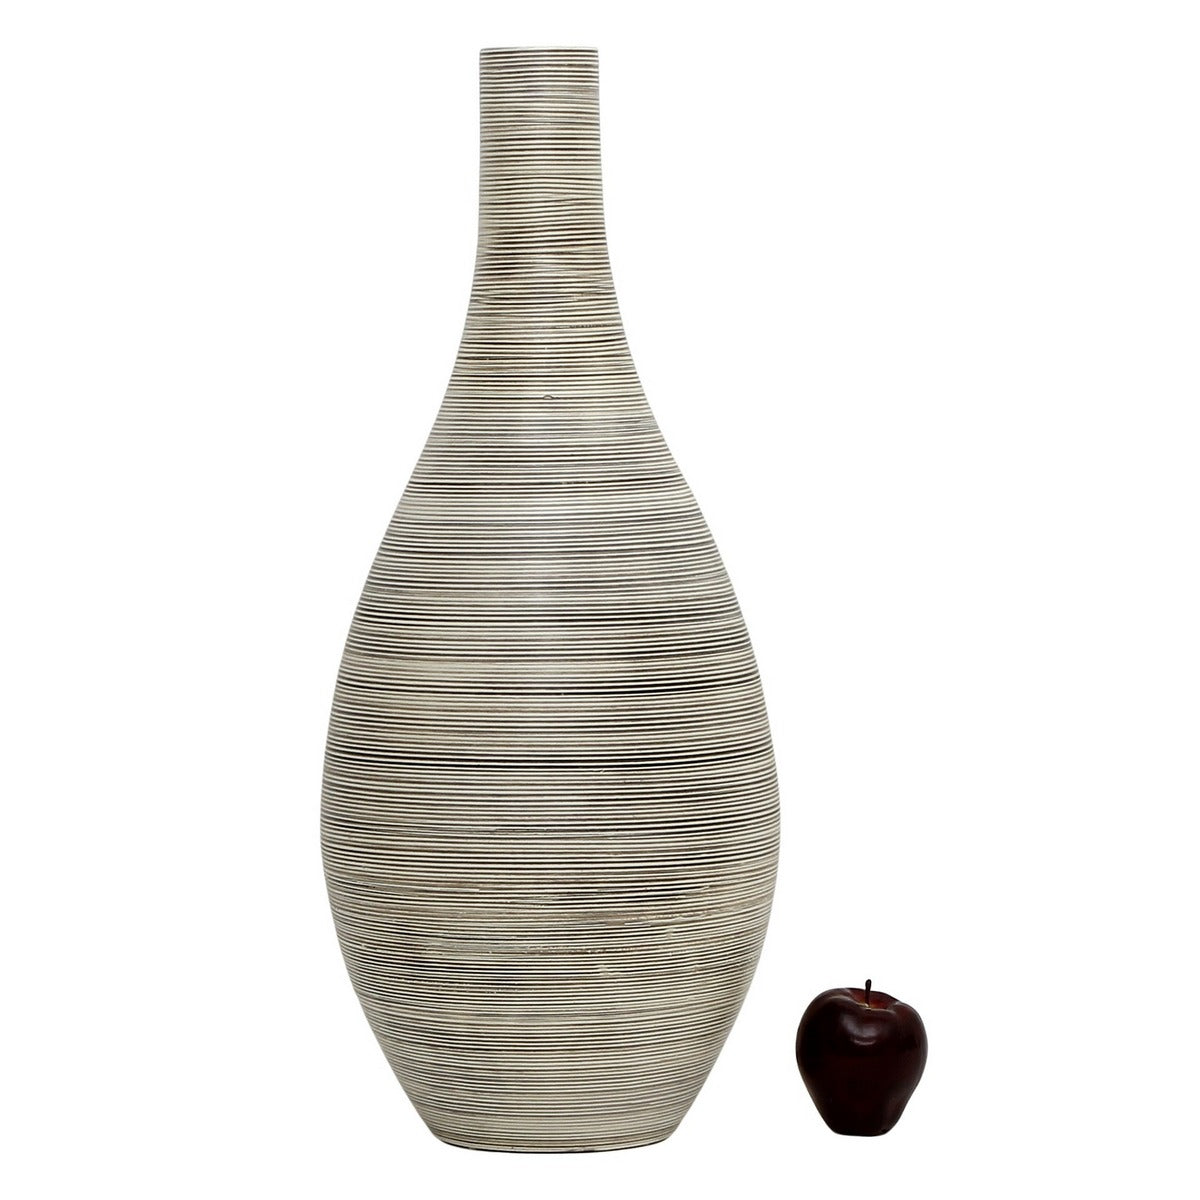 SABBIA TOSCANA: Very Tall Shaped Narrow Neck Vase - Artistica.com